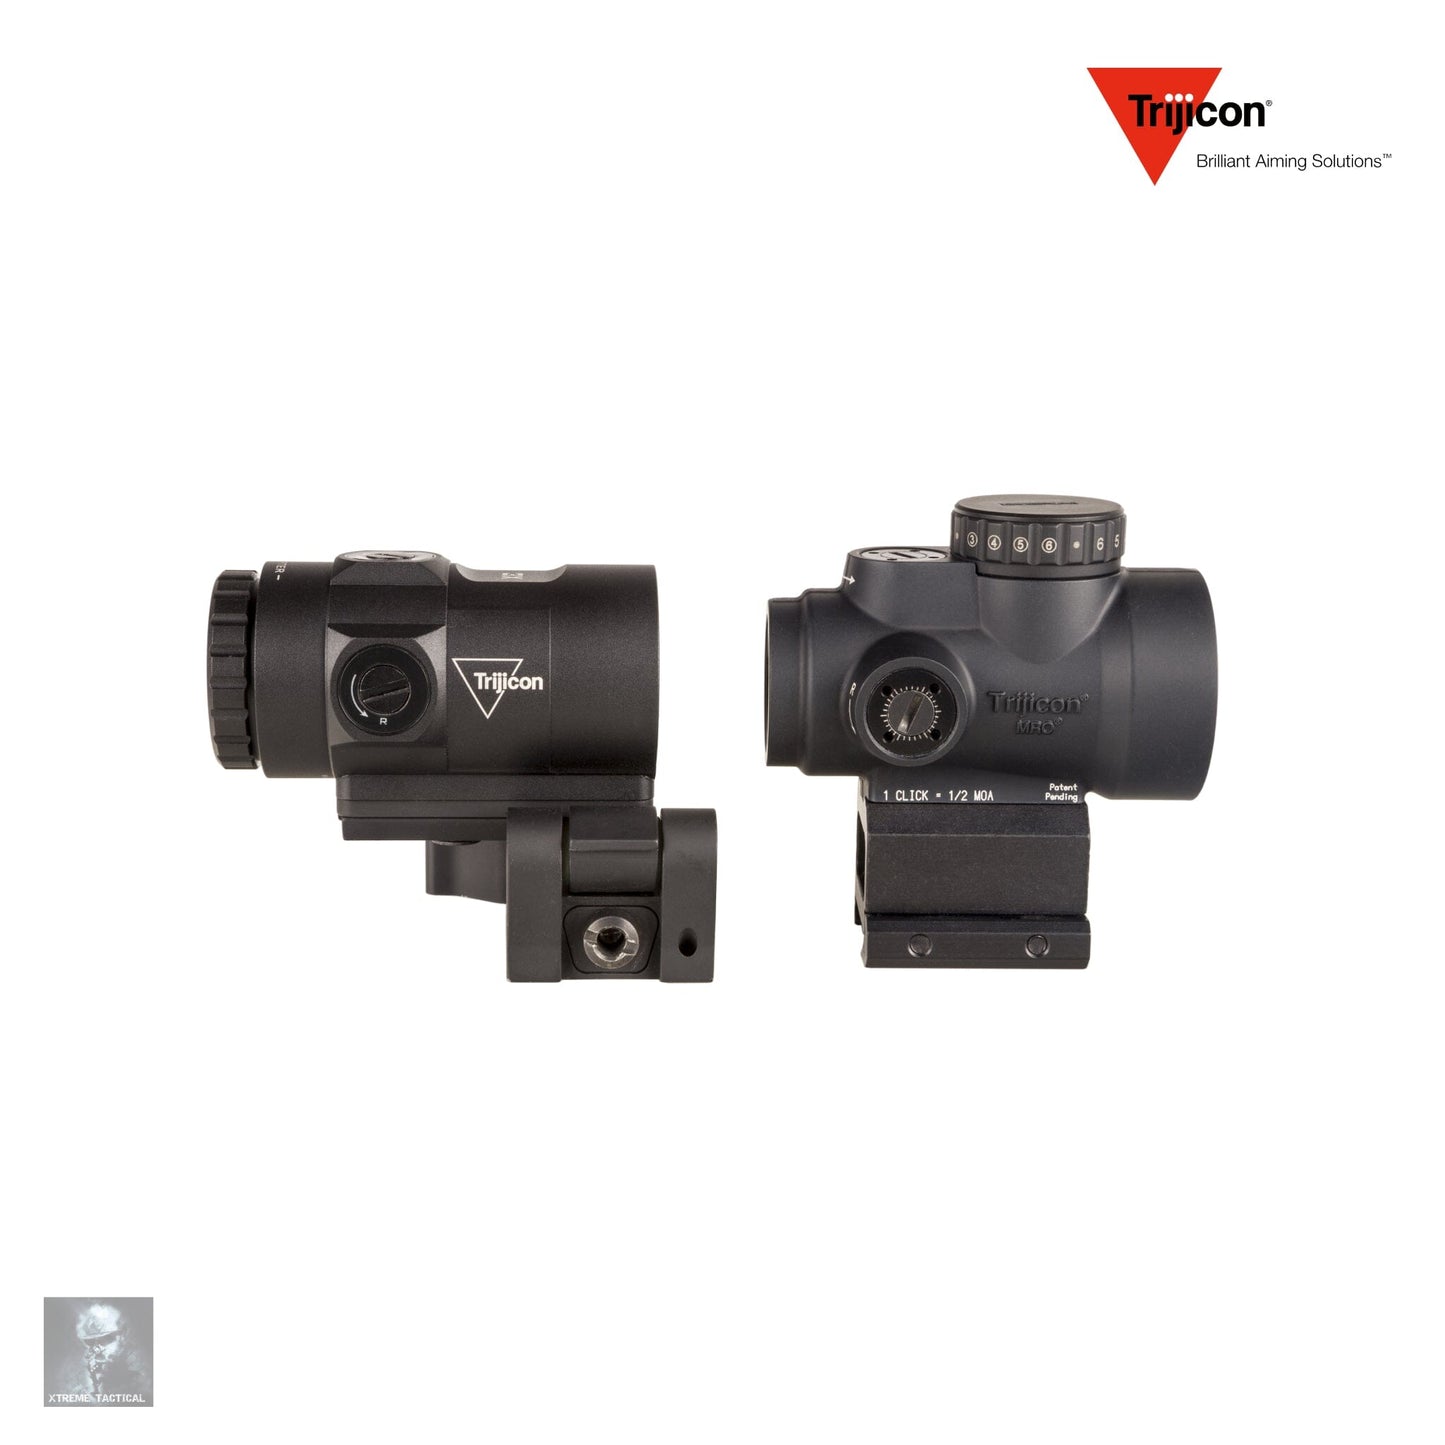 Trijicon MRO HD 1x25 Red Dot Sight with 3x Magnifier - MRO-C-2200057 Red Dot Sight Trijicon 